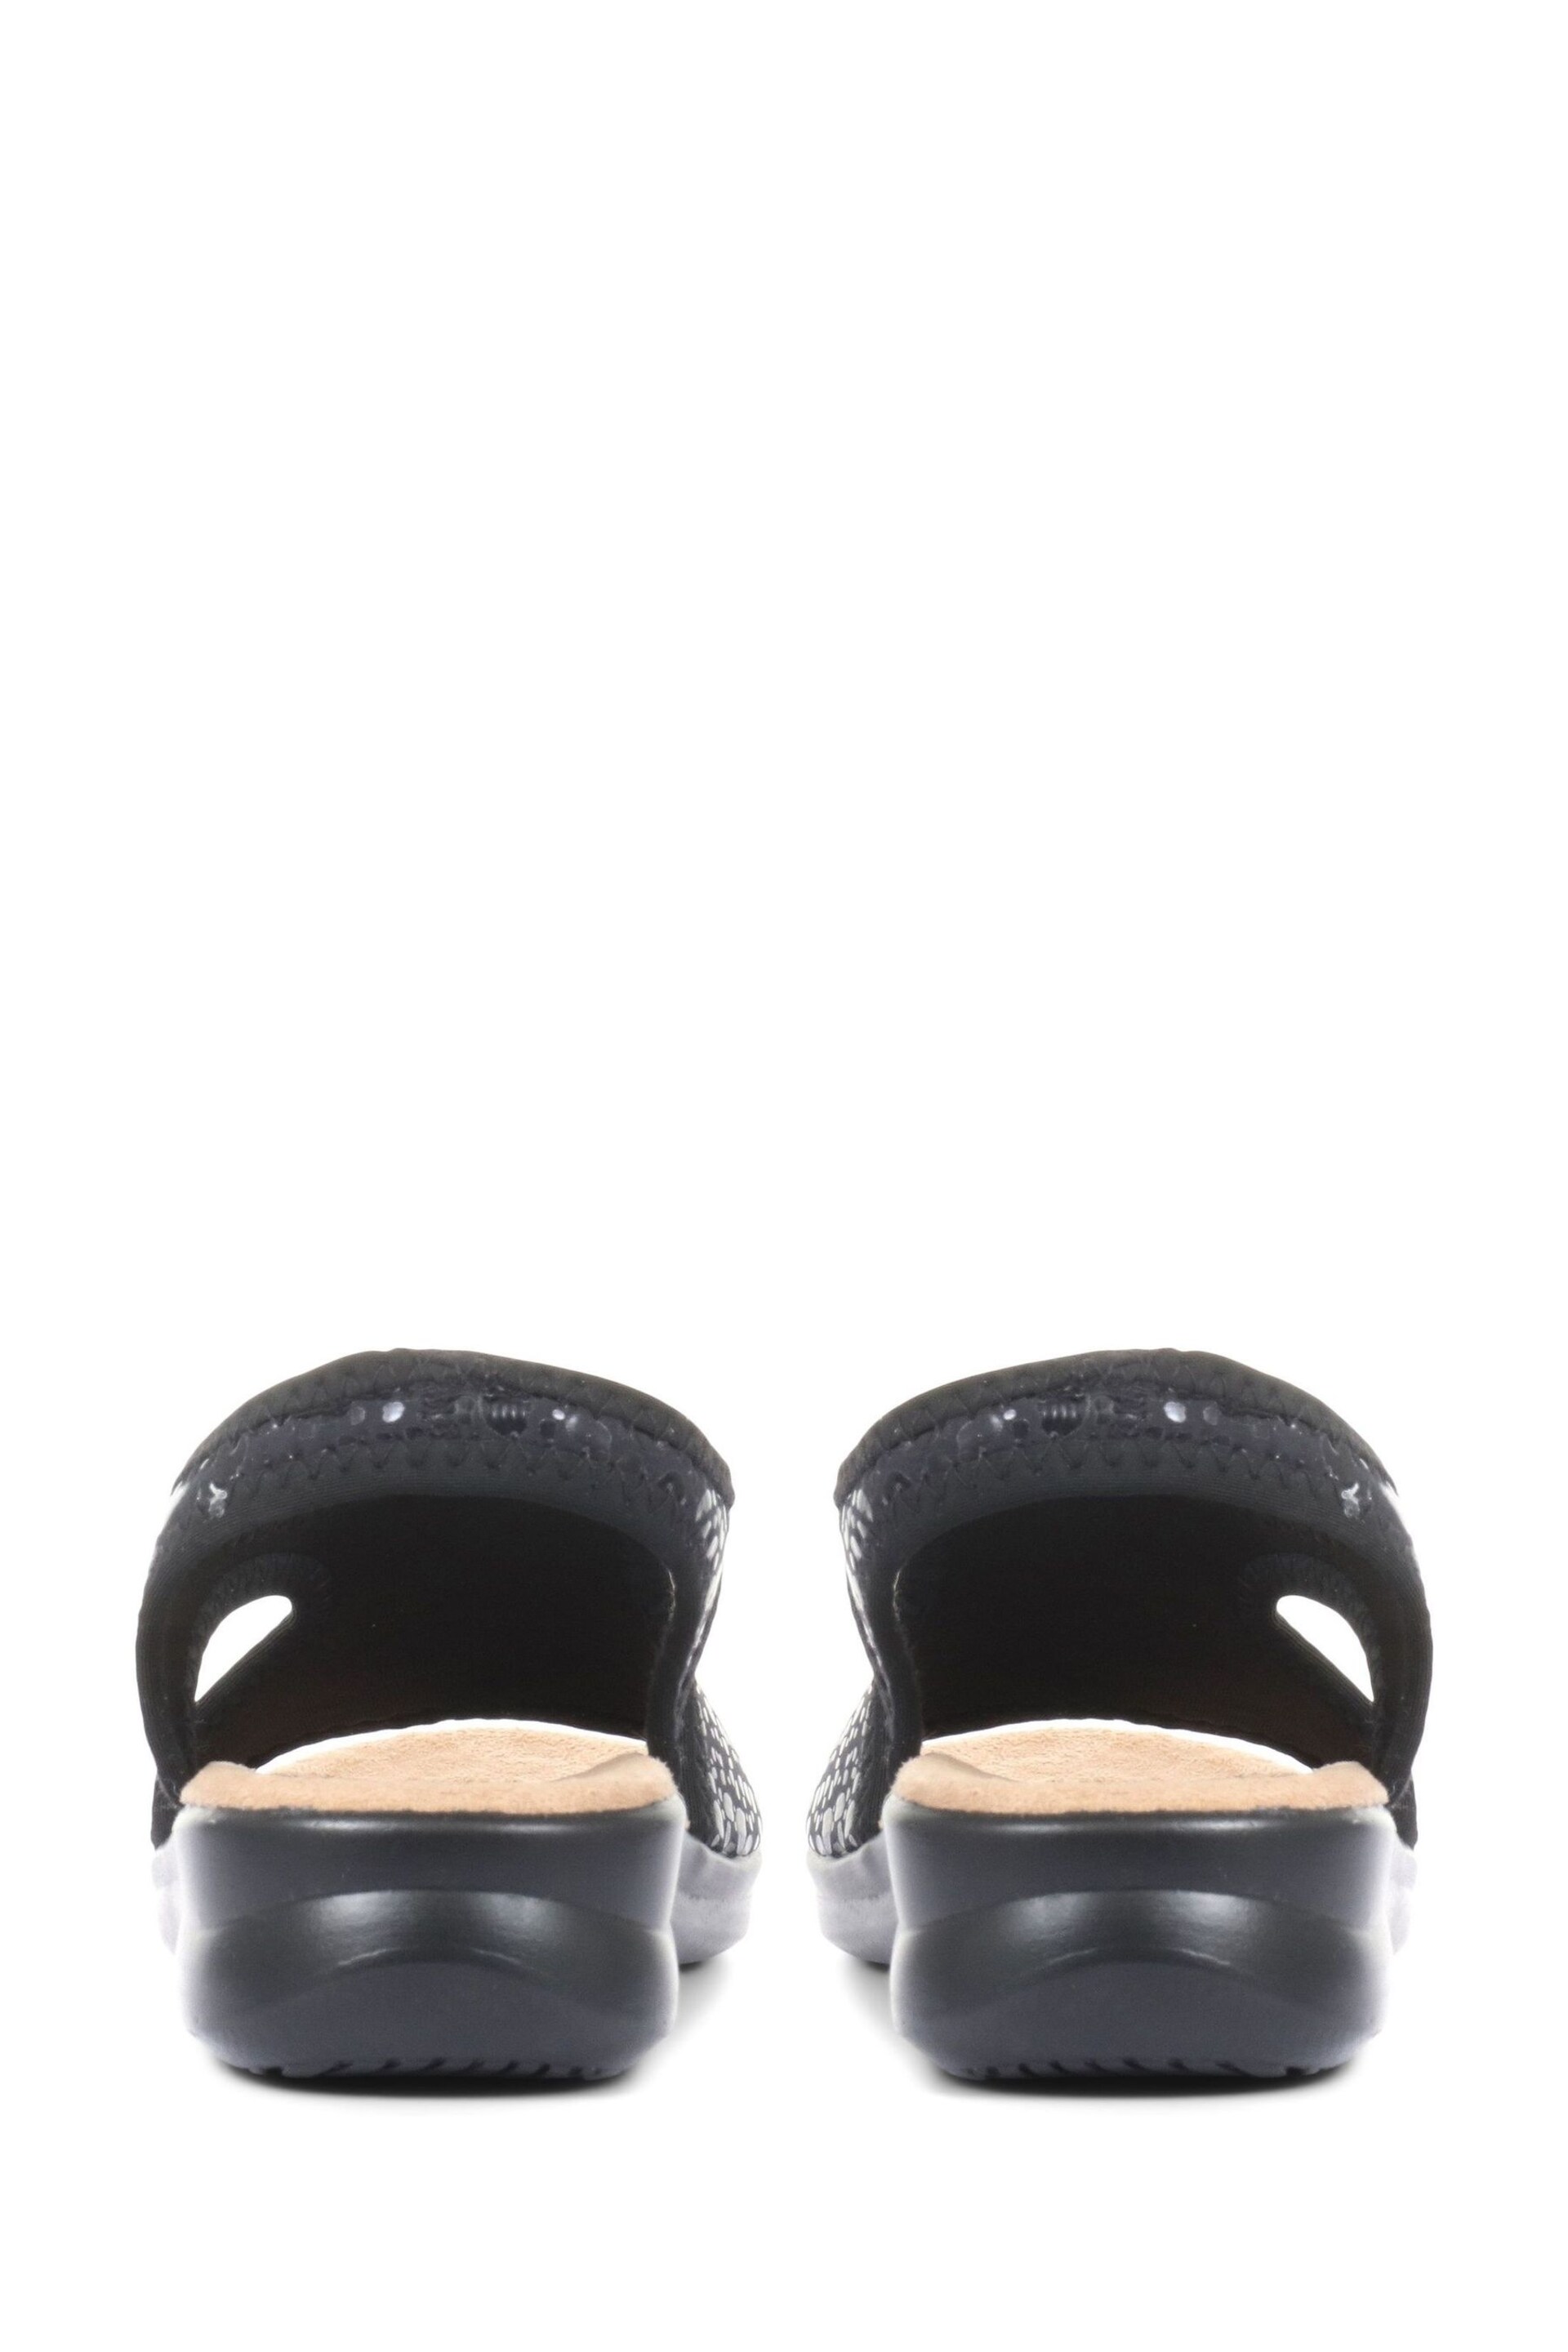 Pavers Pull-On Black Sandals - Image 7 of 7